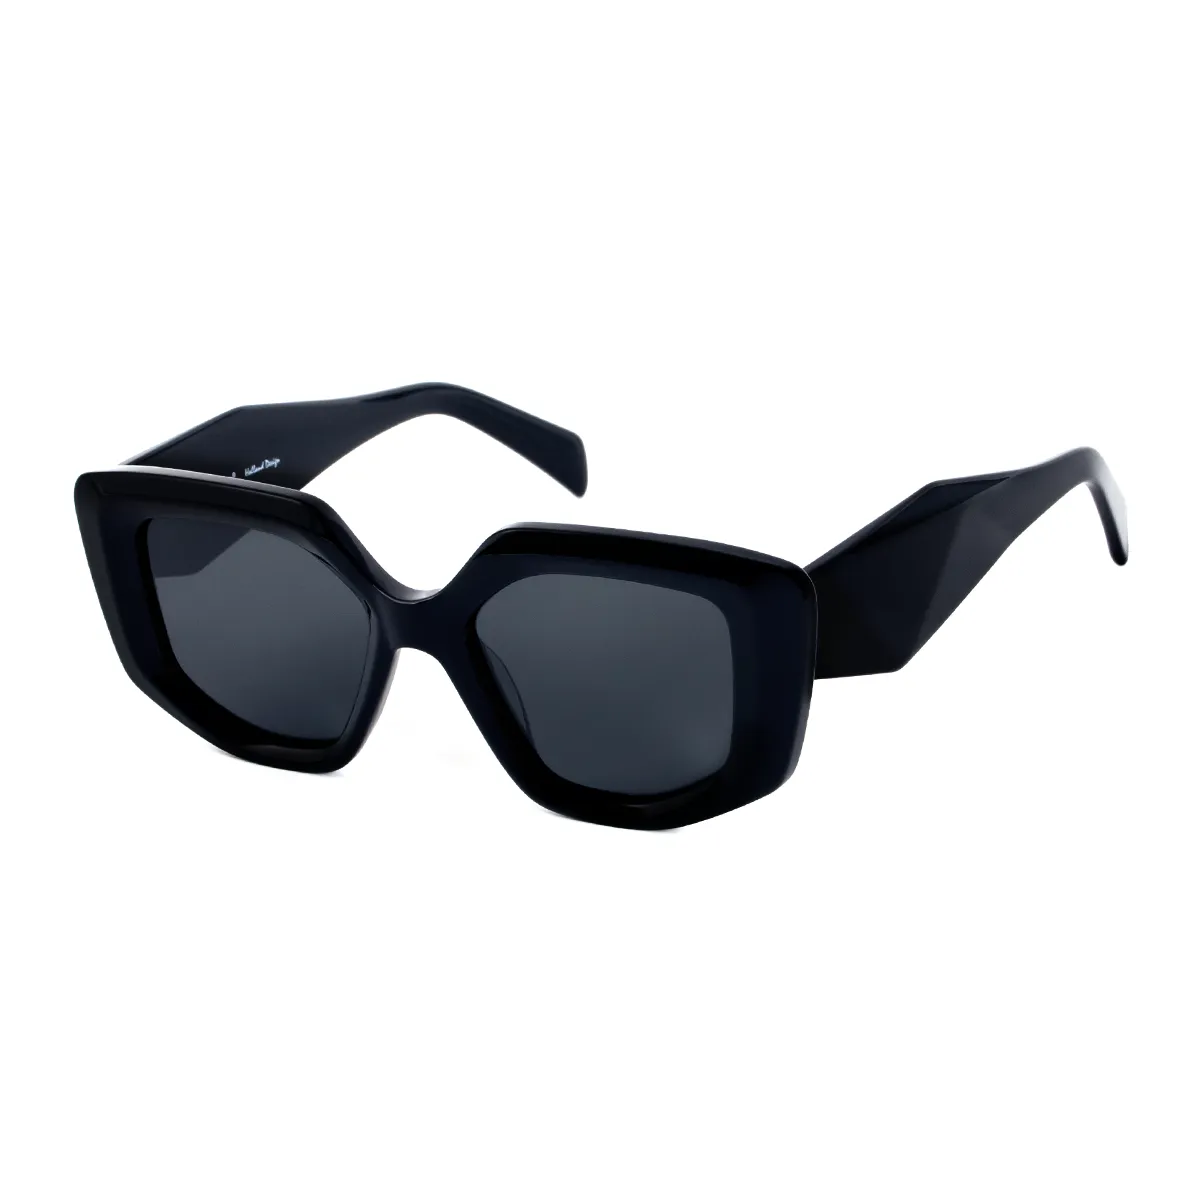 Brittany - Geometric Black Sunglasses for Women